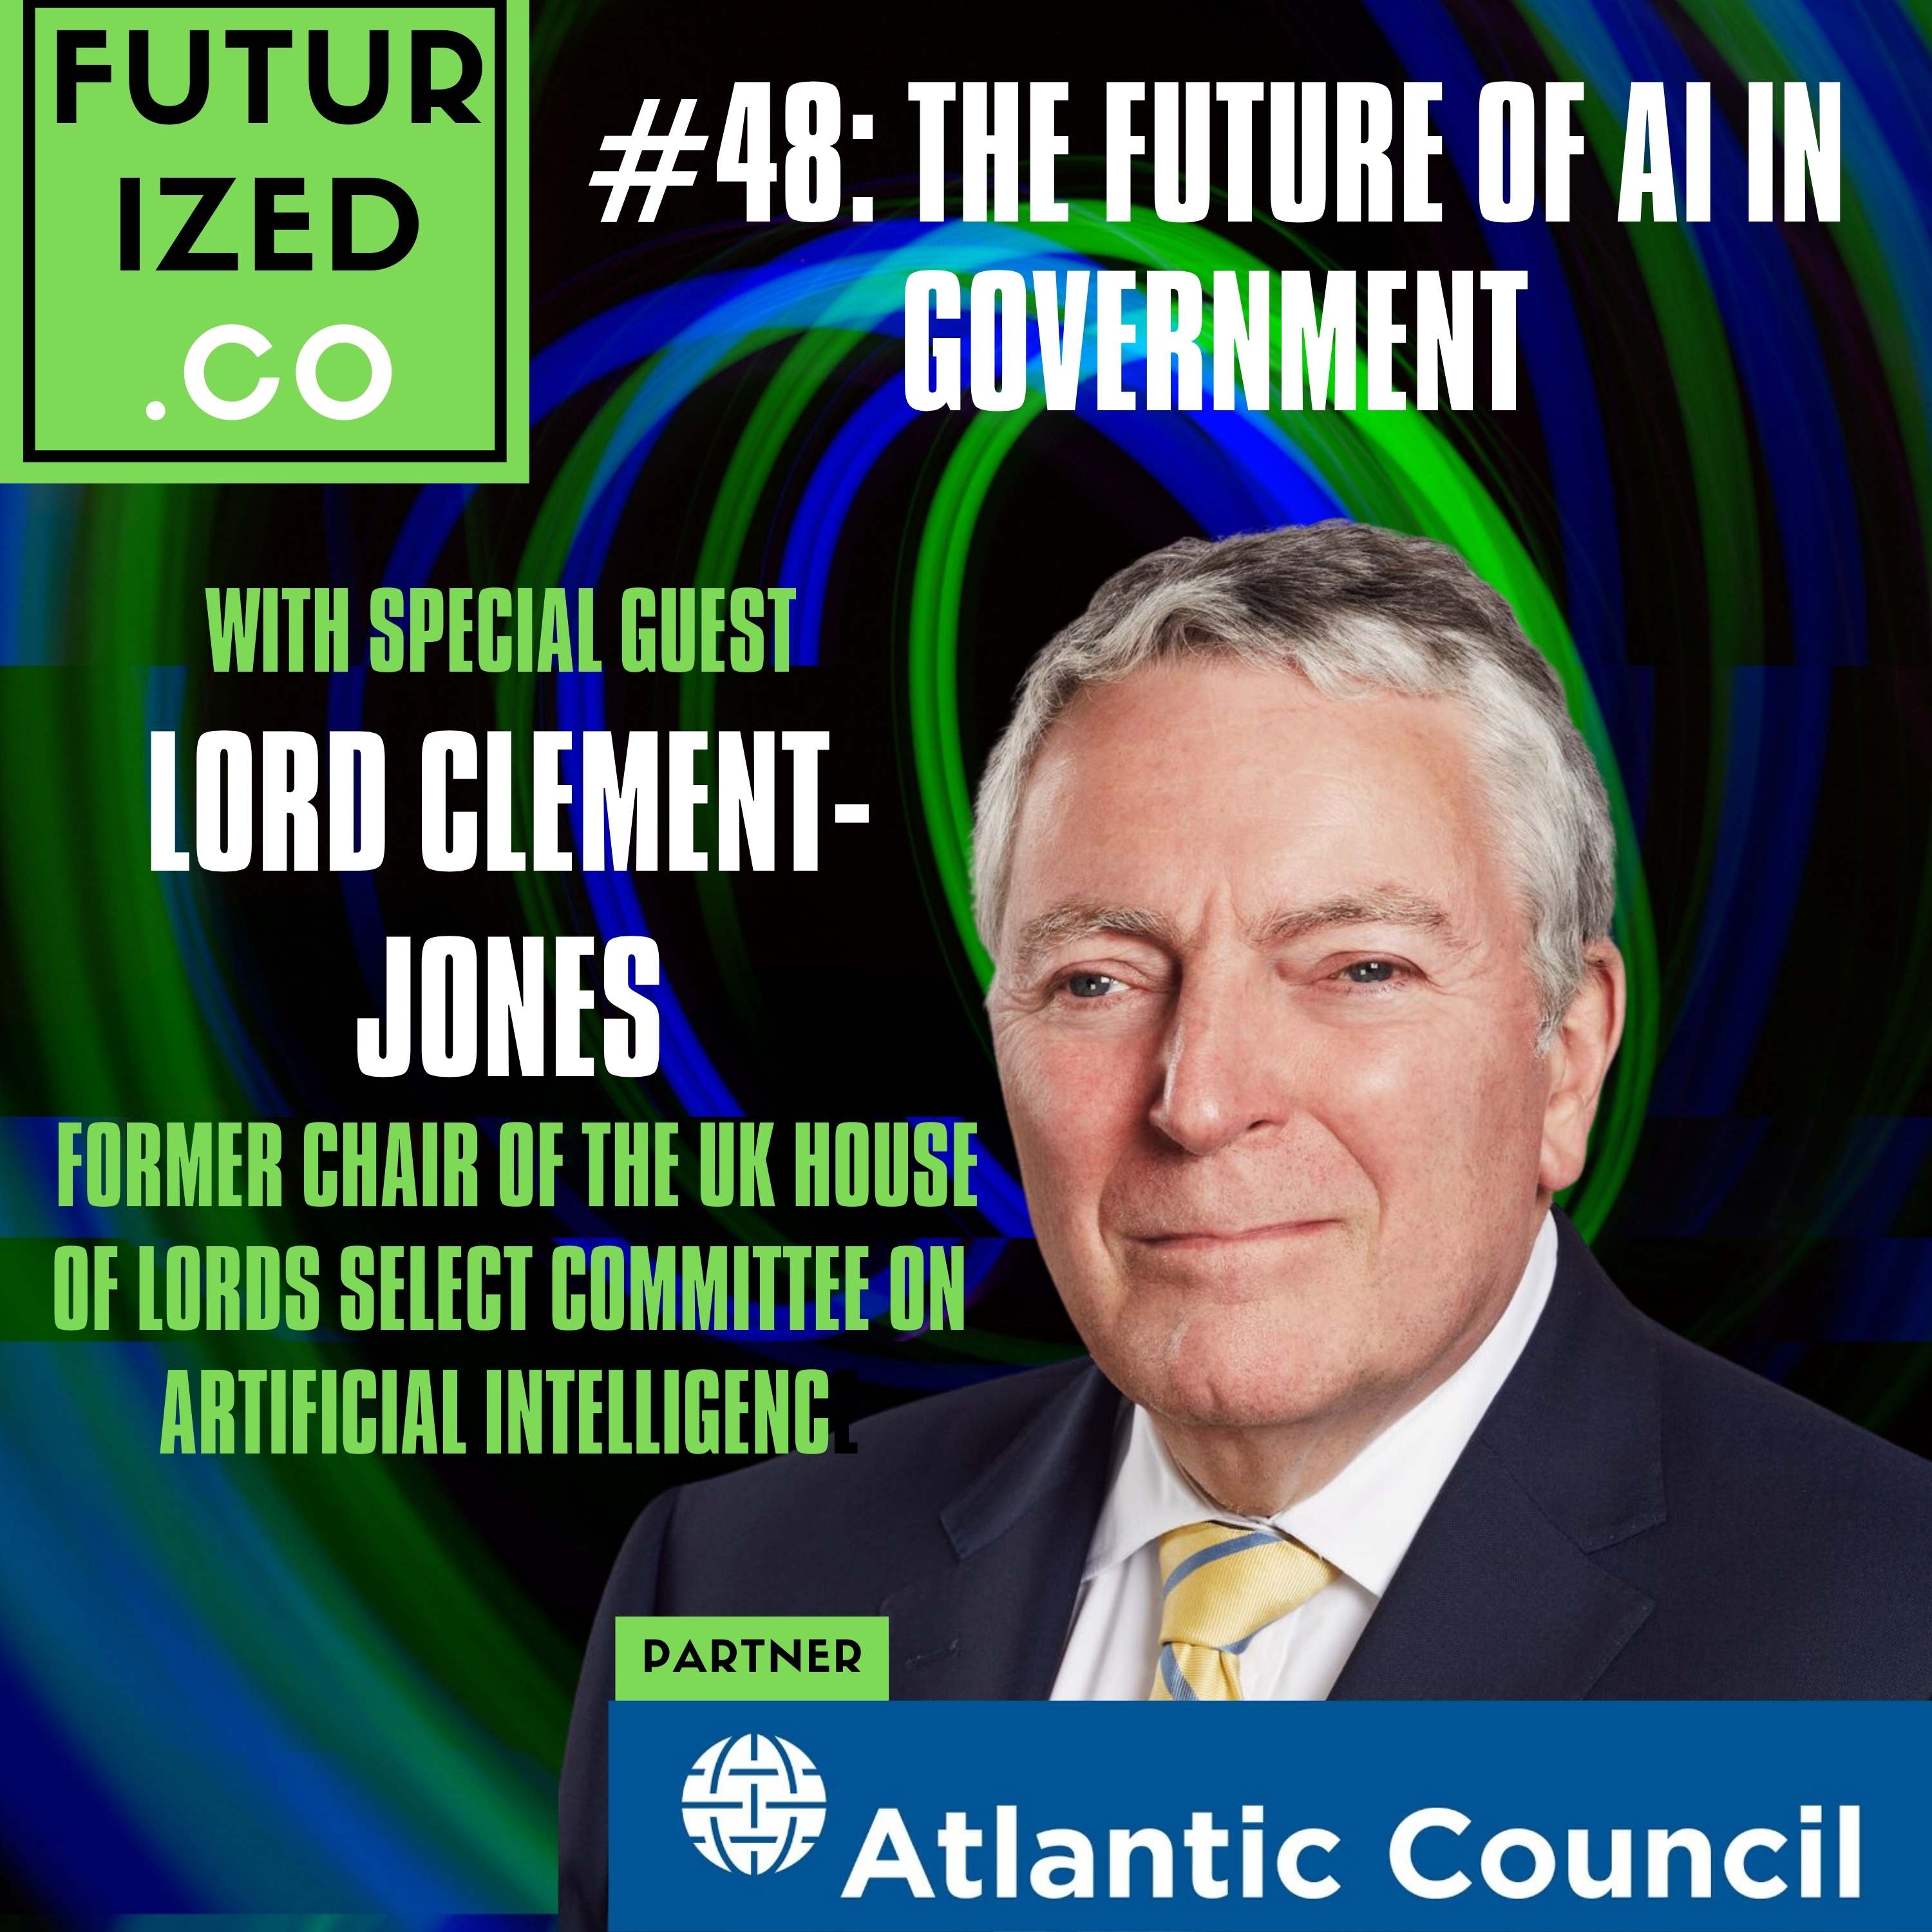 The Future of AI in Government Image